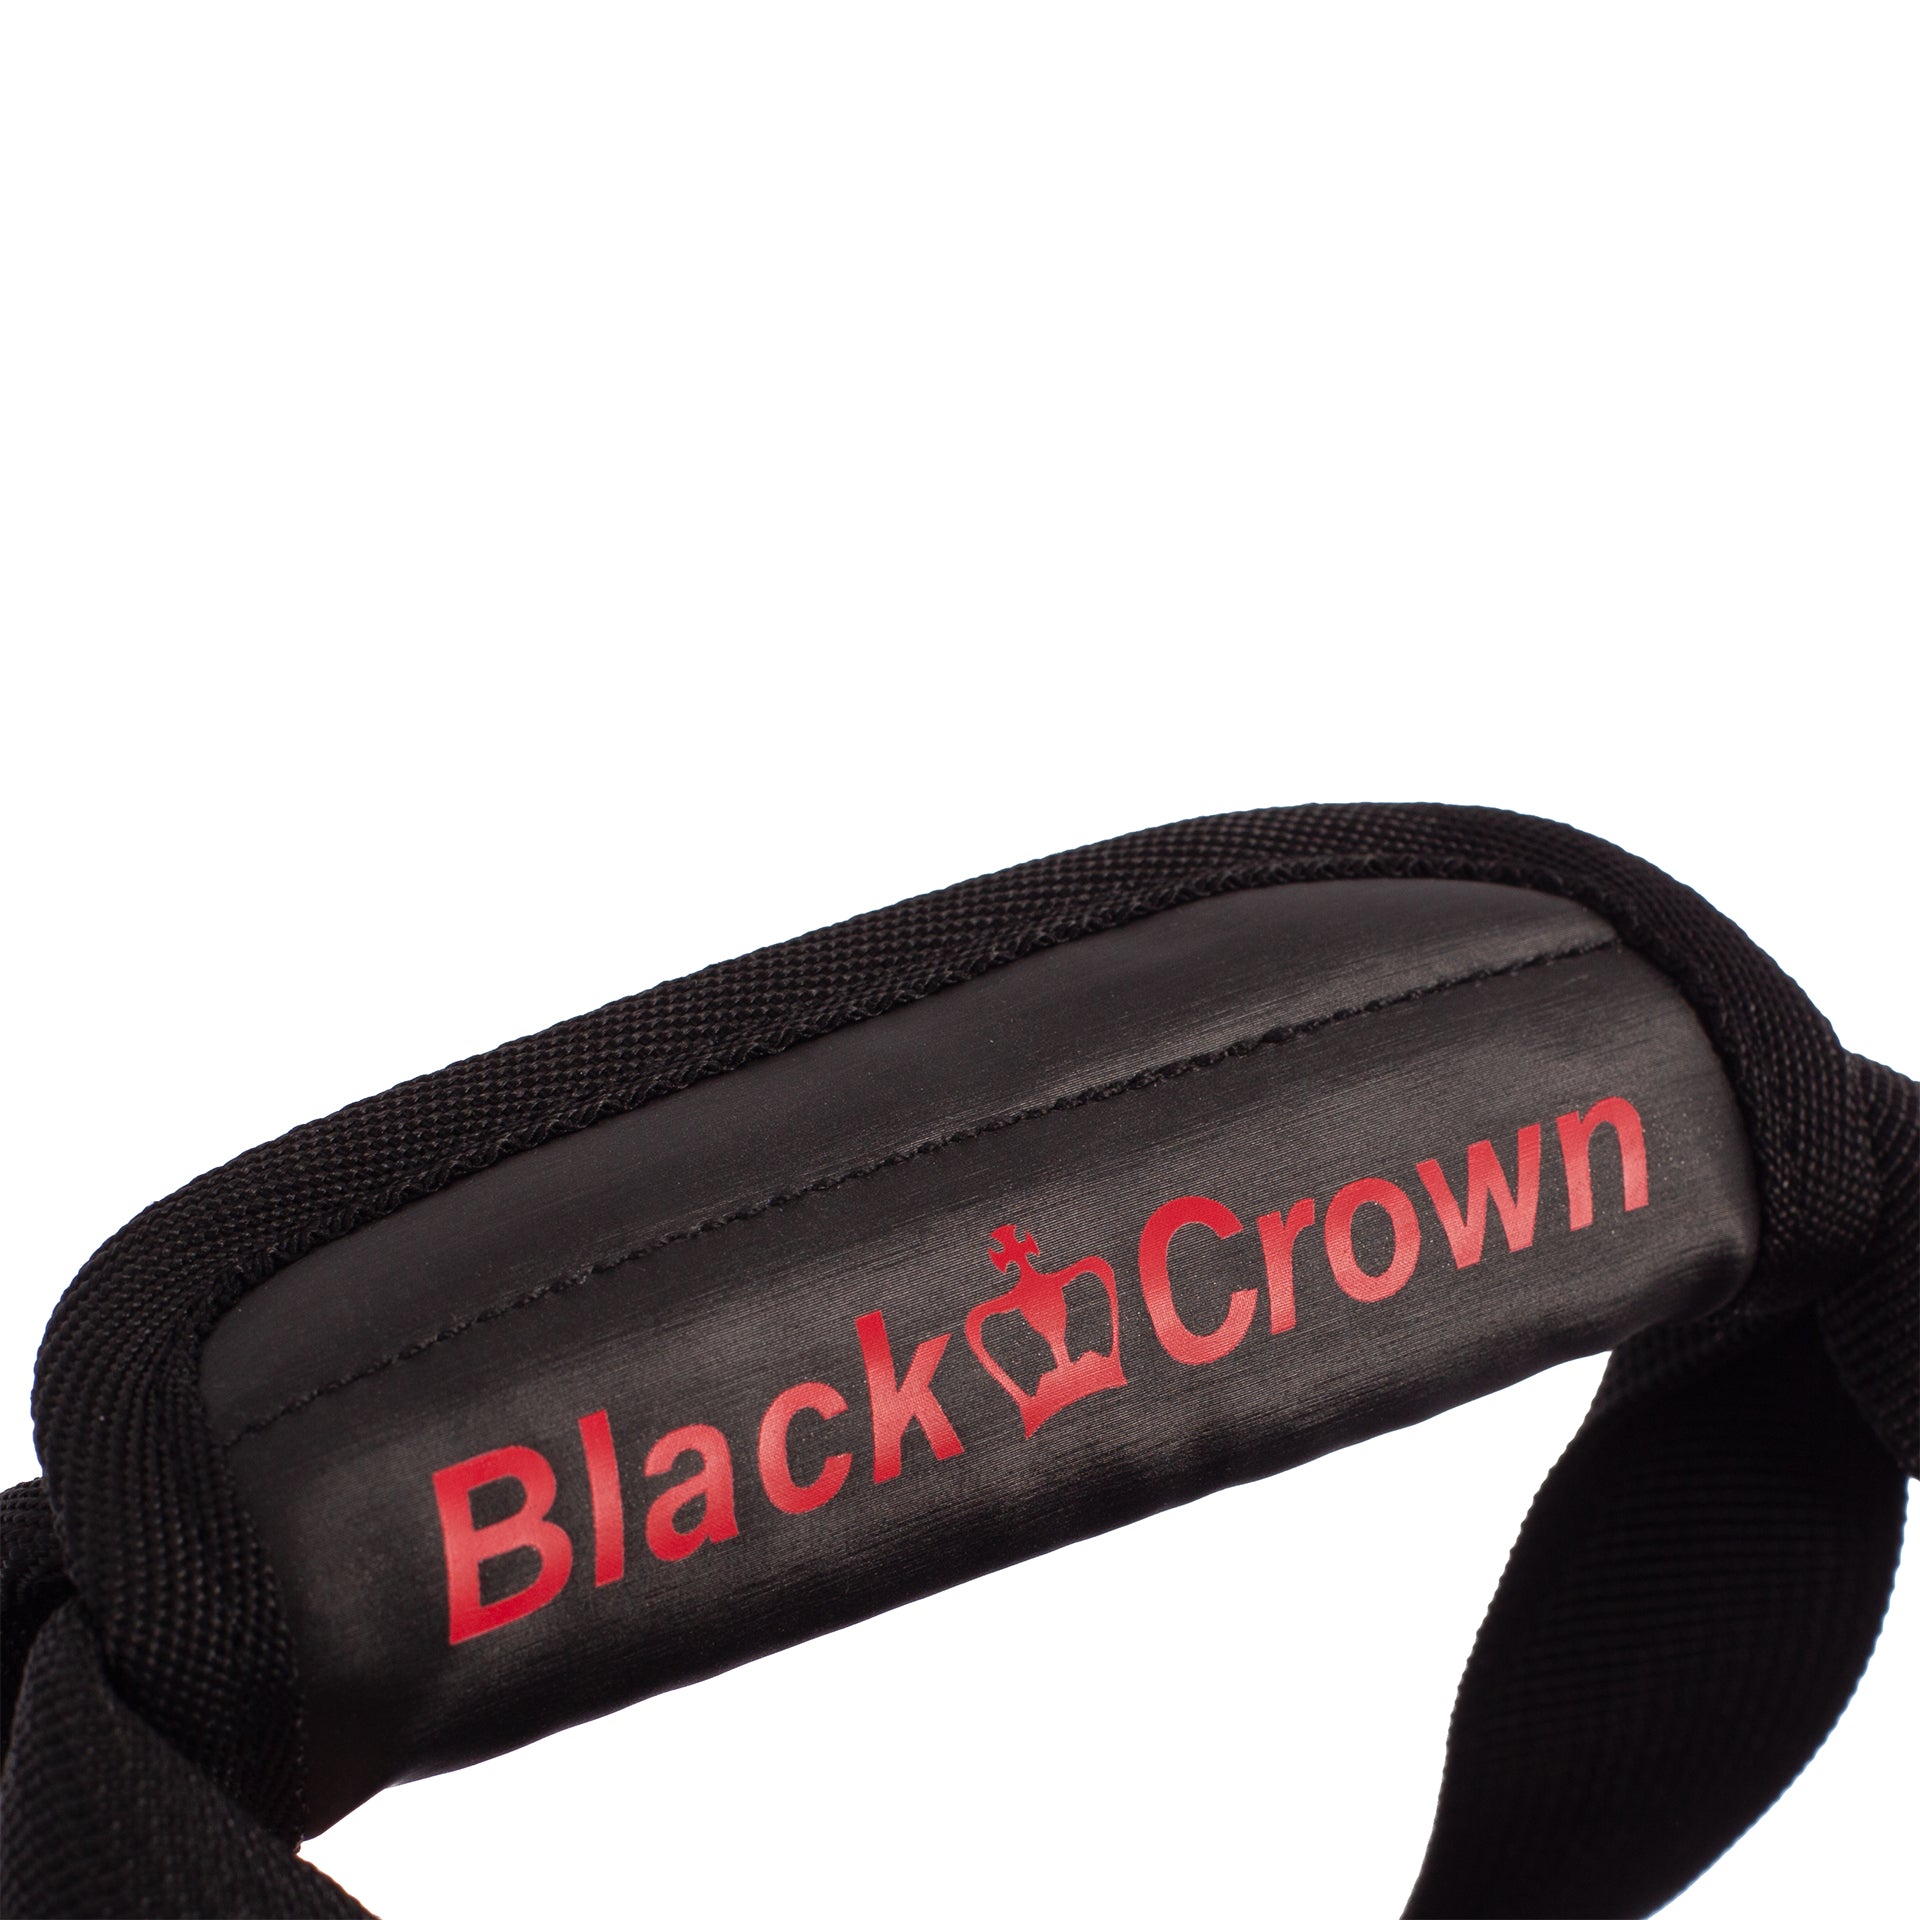 Paletero Ultimate Pro 2.0 Negro y rojo -  Black Crown 6